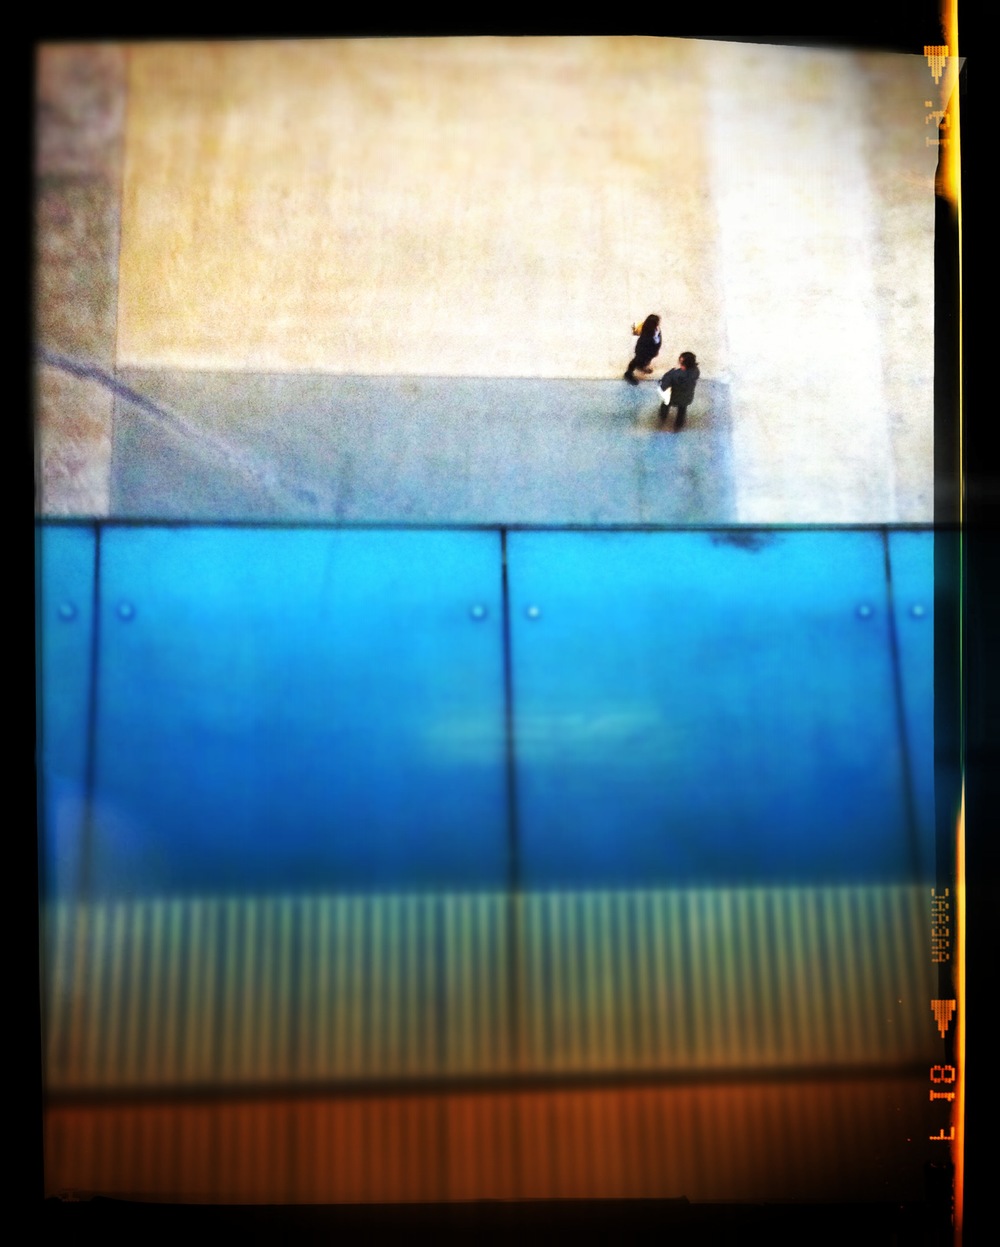 '2 people' - Tate Modern, London, 2014